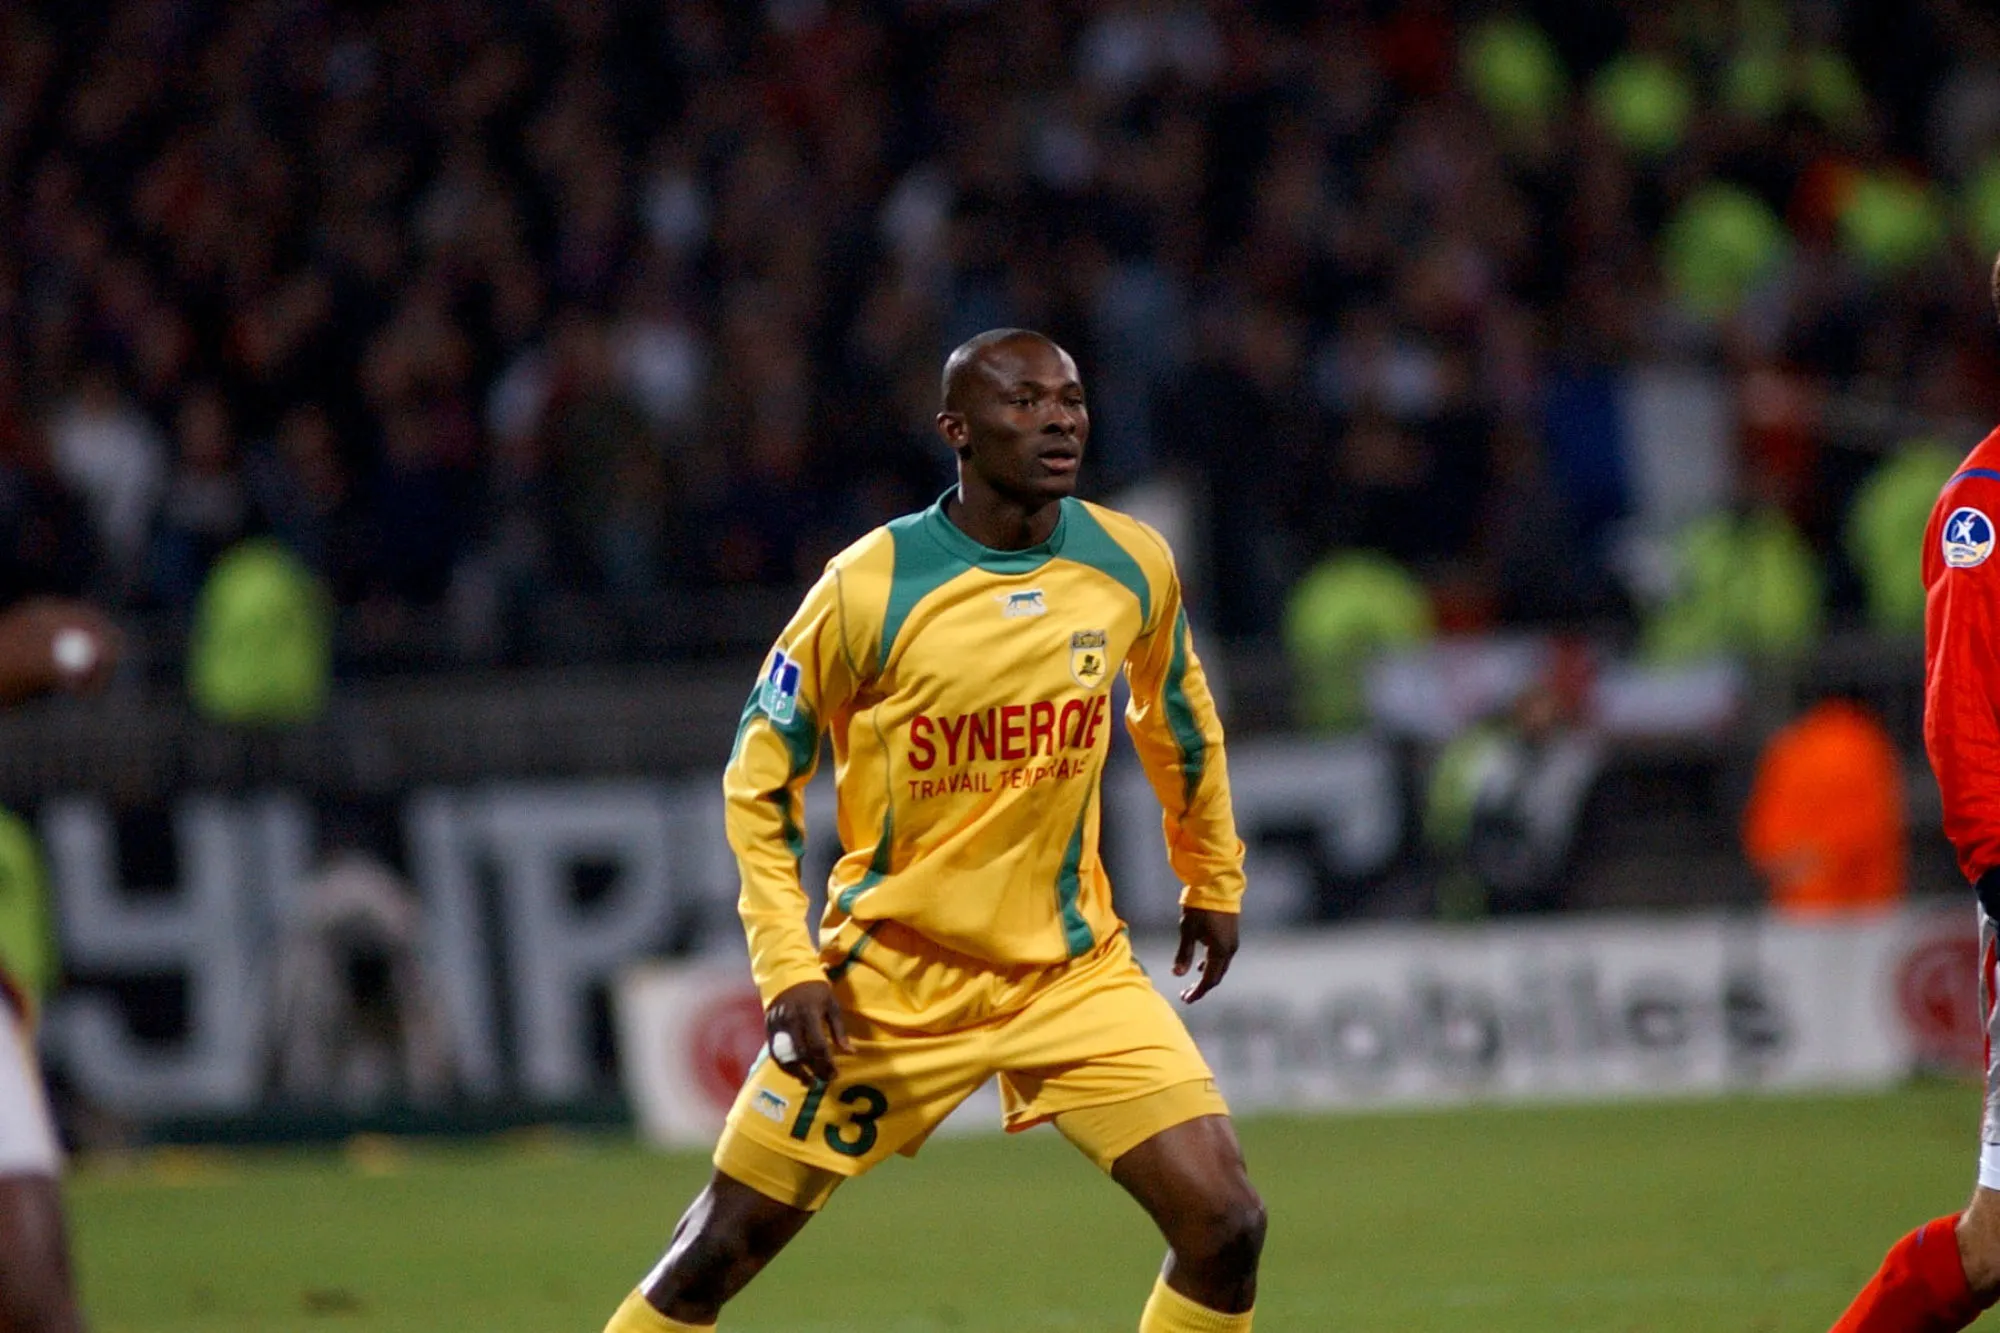 On a retrouvé Mamadou Diallo, l'homme qui a sauvé Nantes en 2005